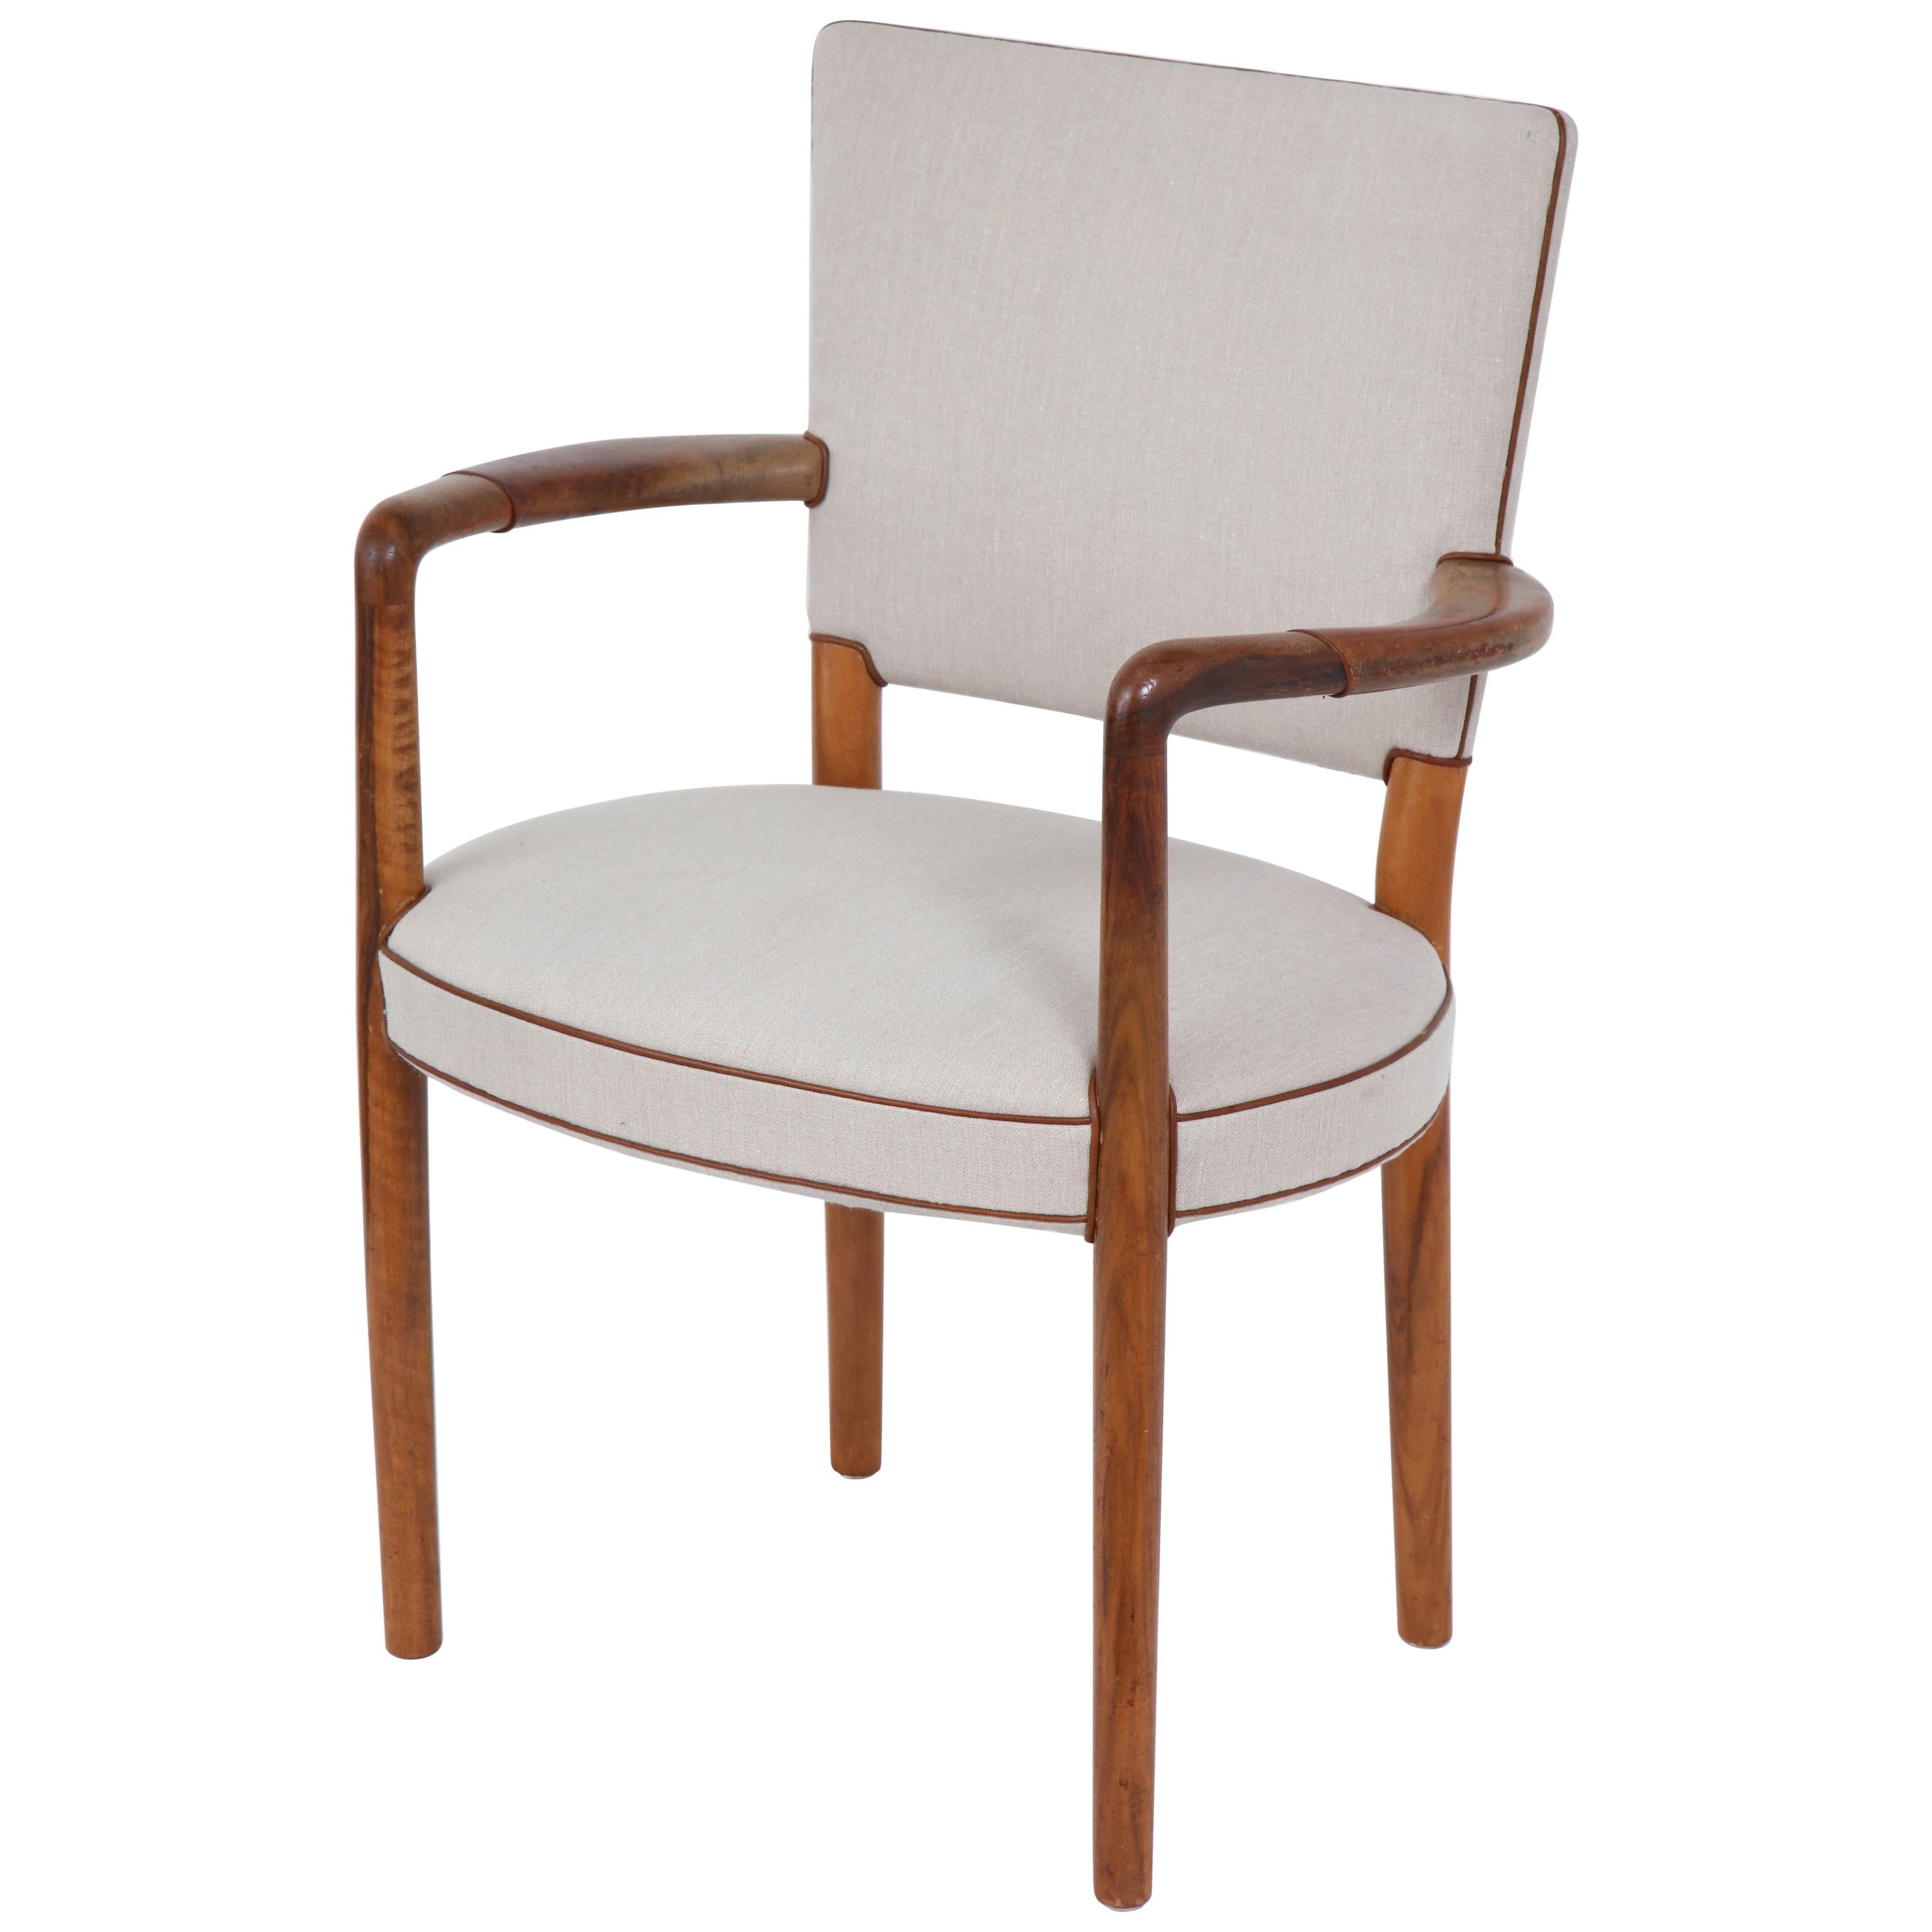 Rare Danish Design Chair by Flemming Lassen and Arne Jacobsen, circa 1950s